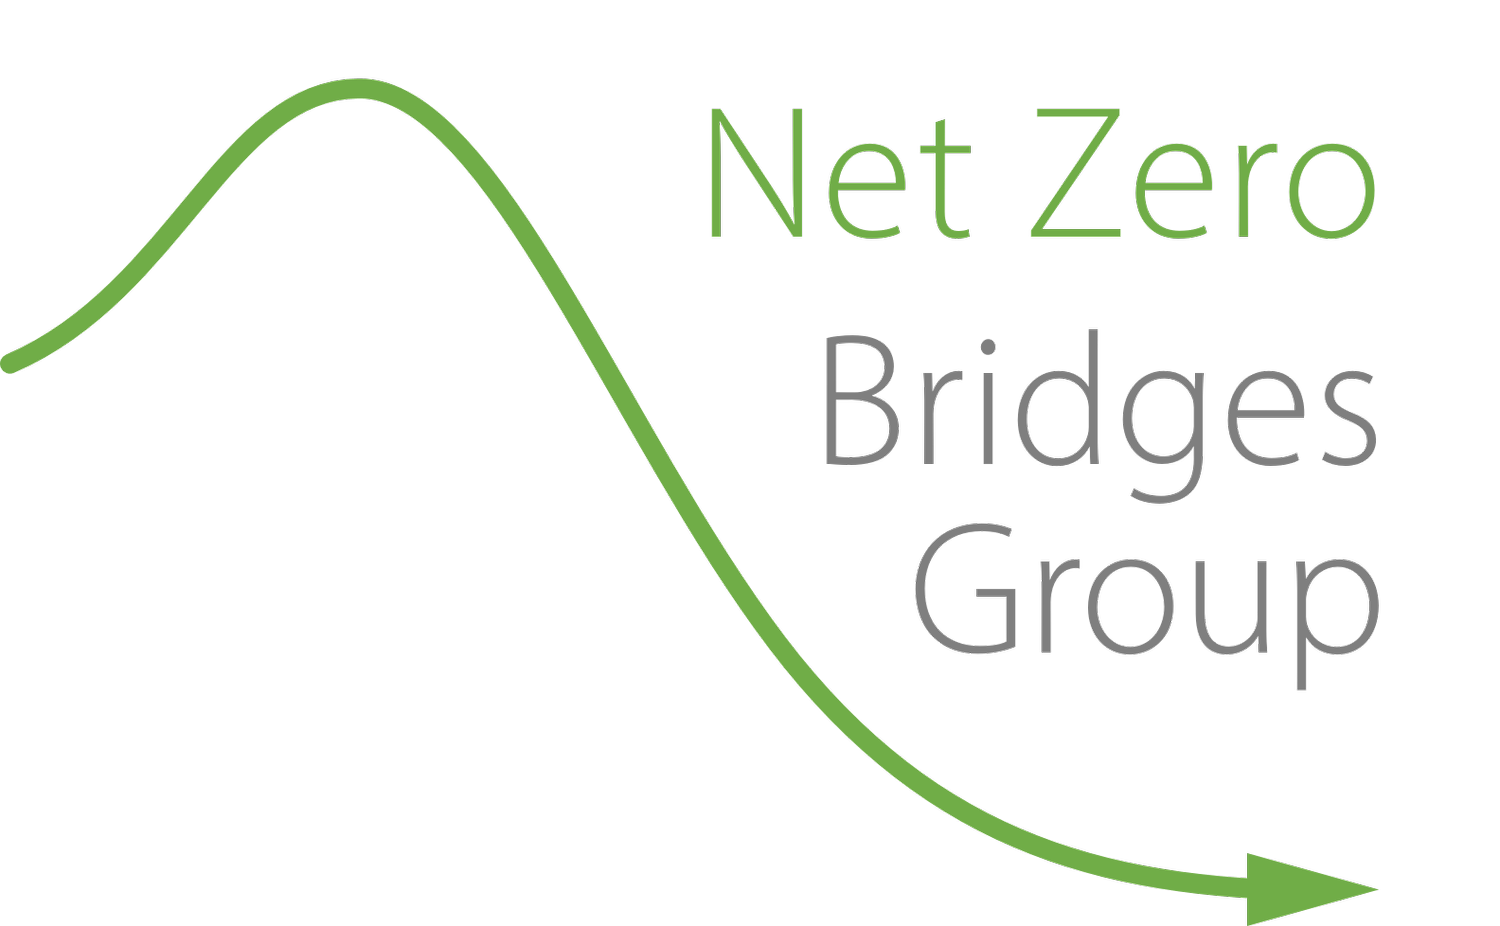 Net Zero Bridges Group